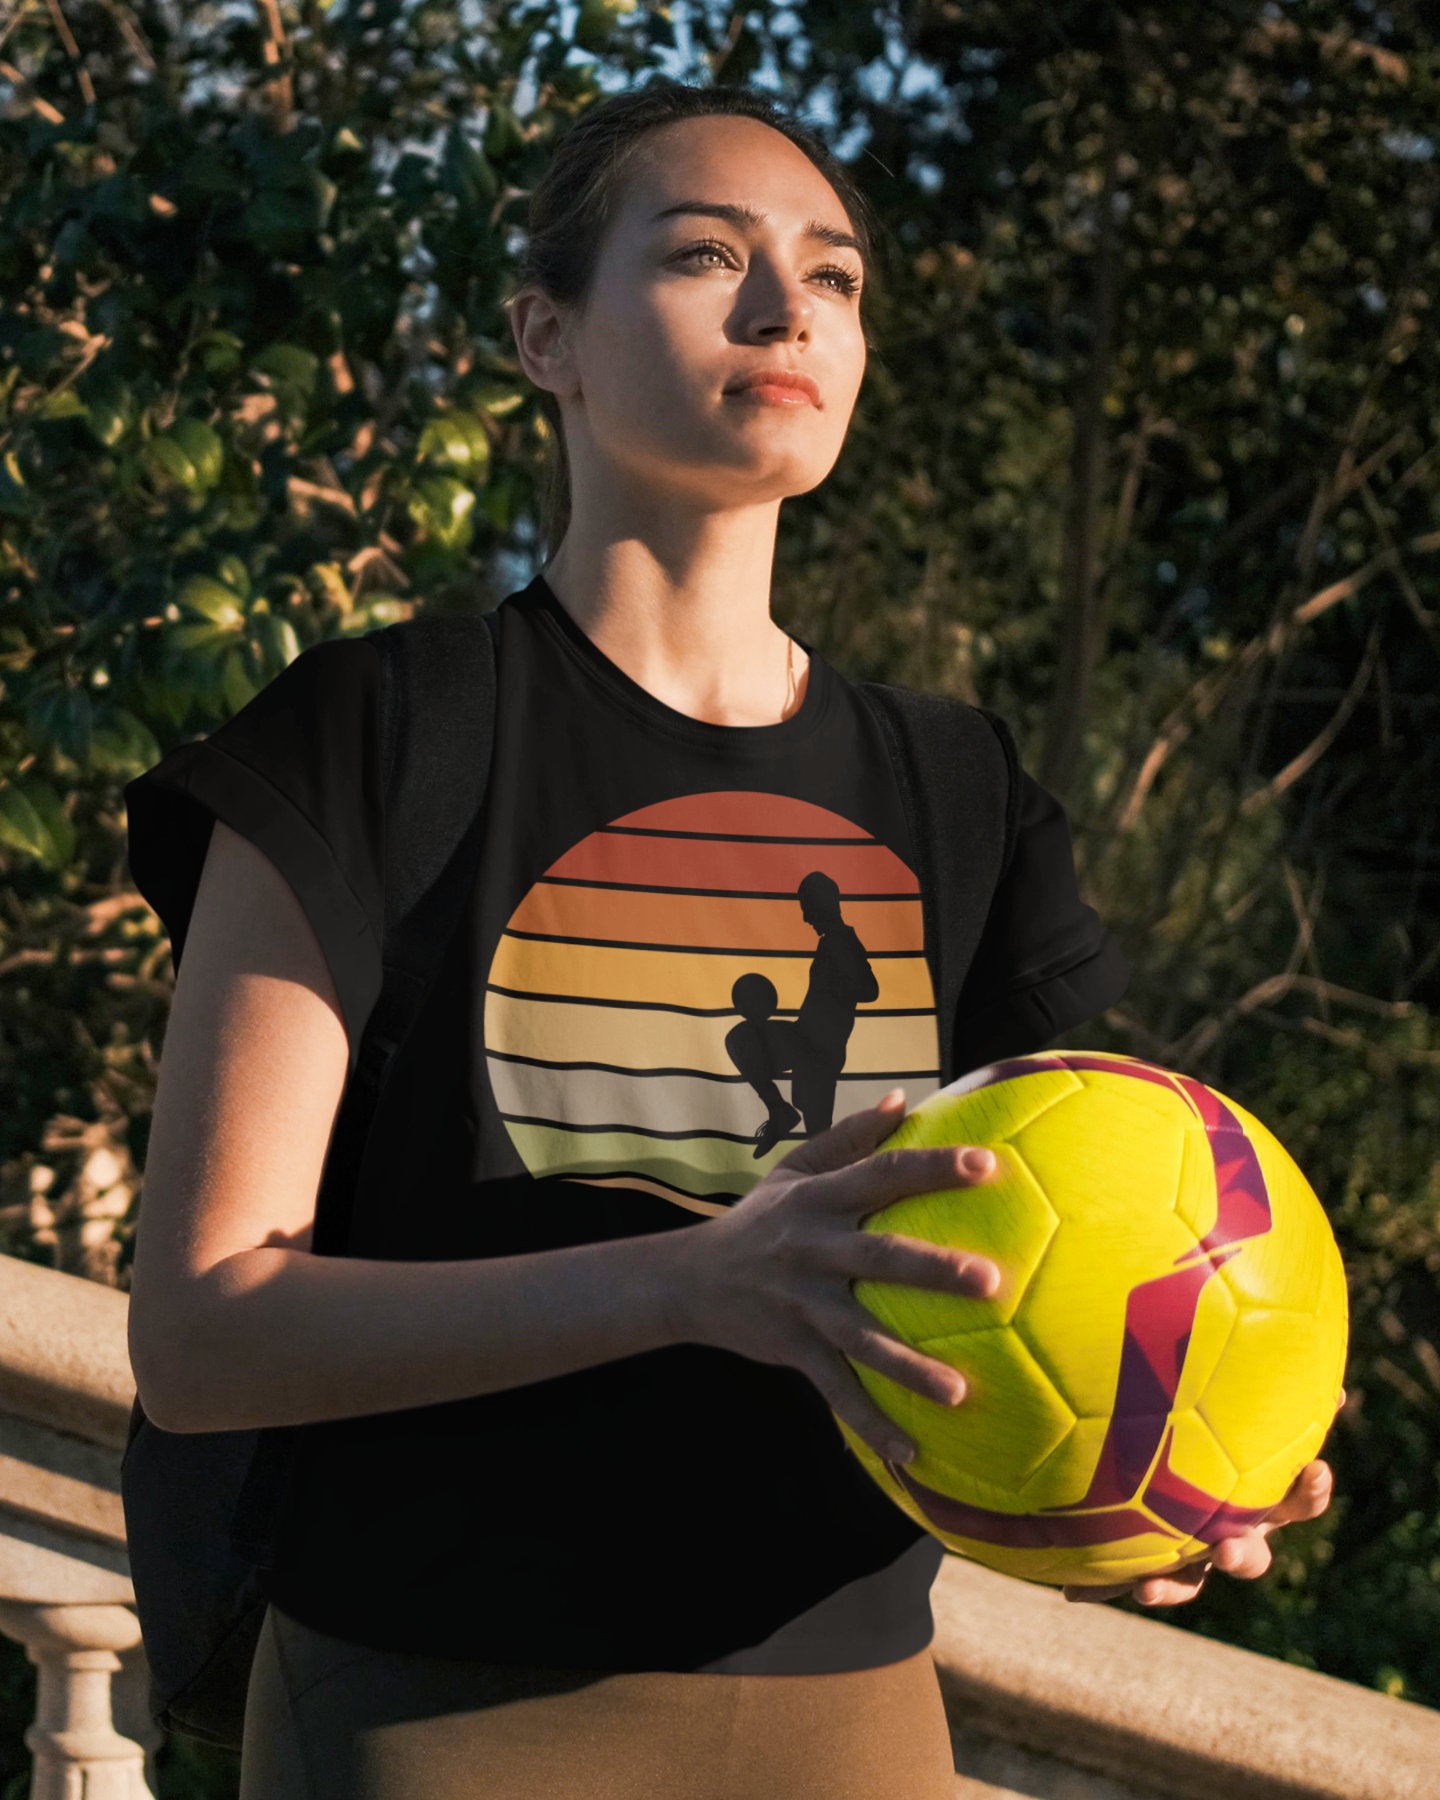 SOCCER SHIRT Retro Vintage Soccer Player Sunset Graphic Short-Sleeve Unisex T-Shirt